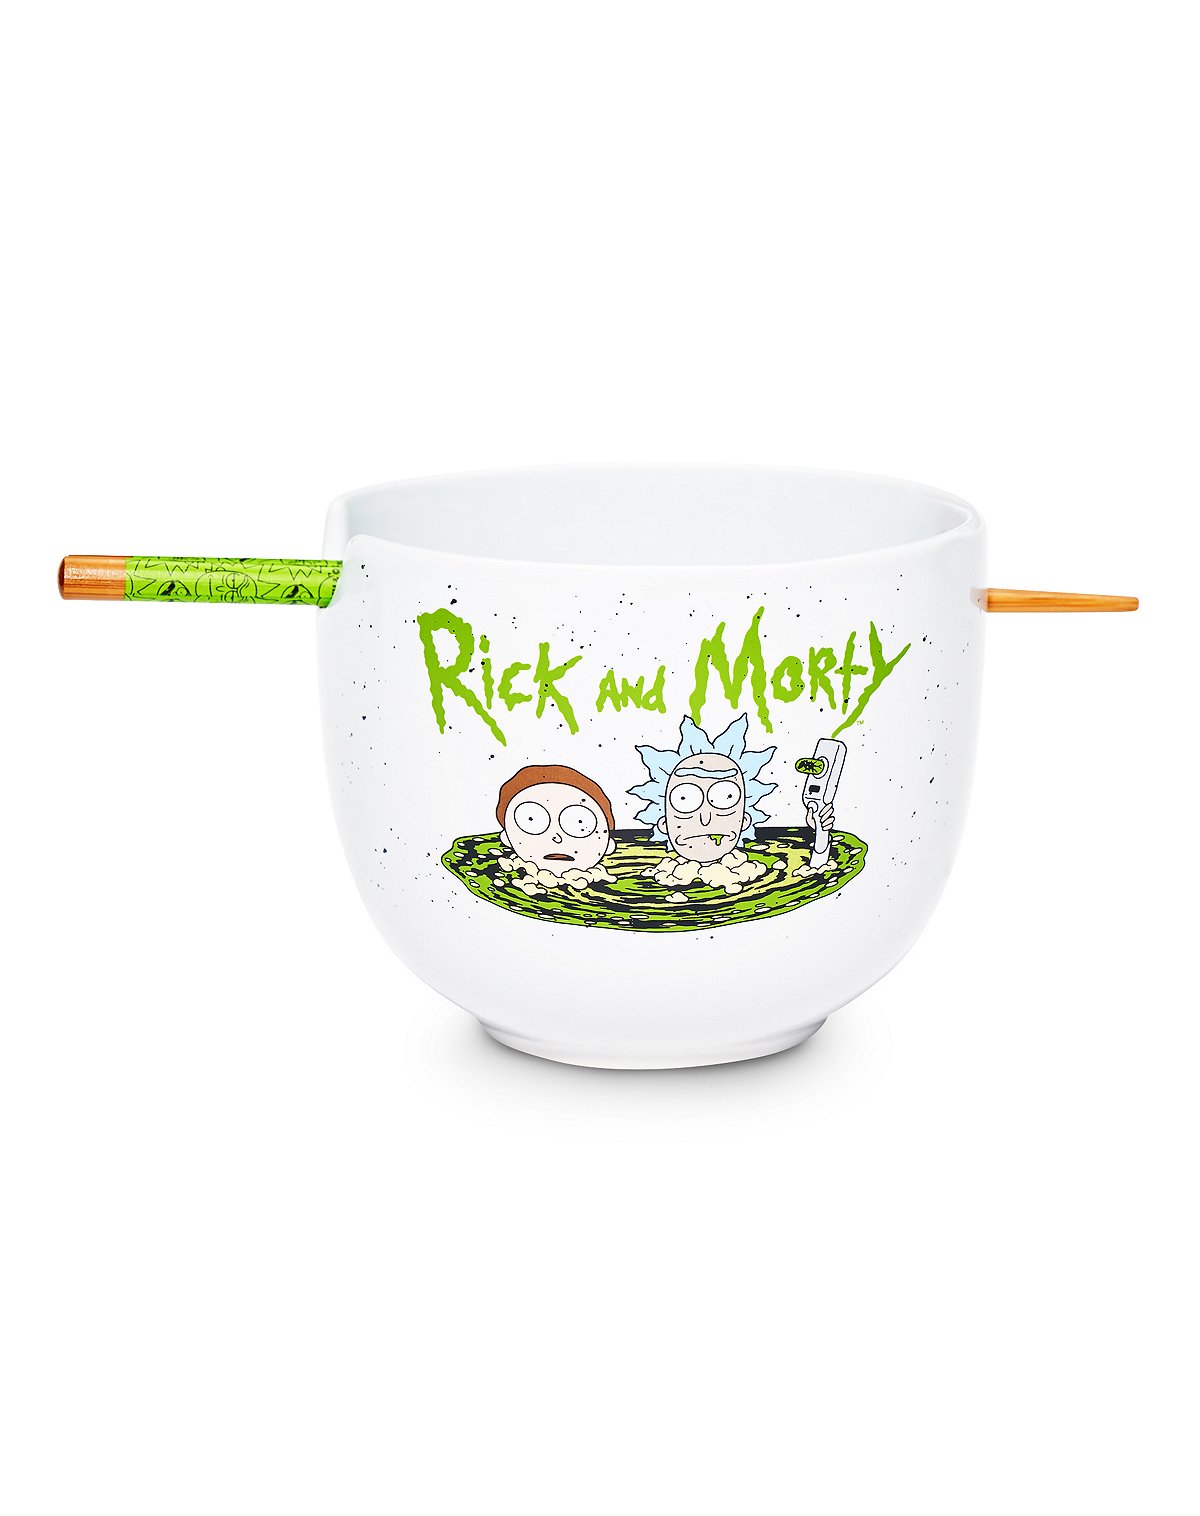 Rick and Morty Bowl with Chopsticks - 20 oz.
